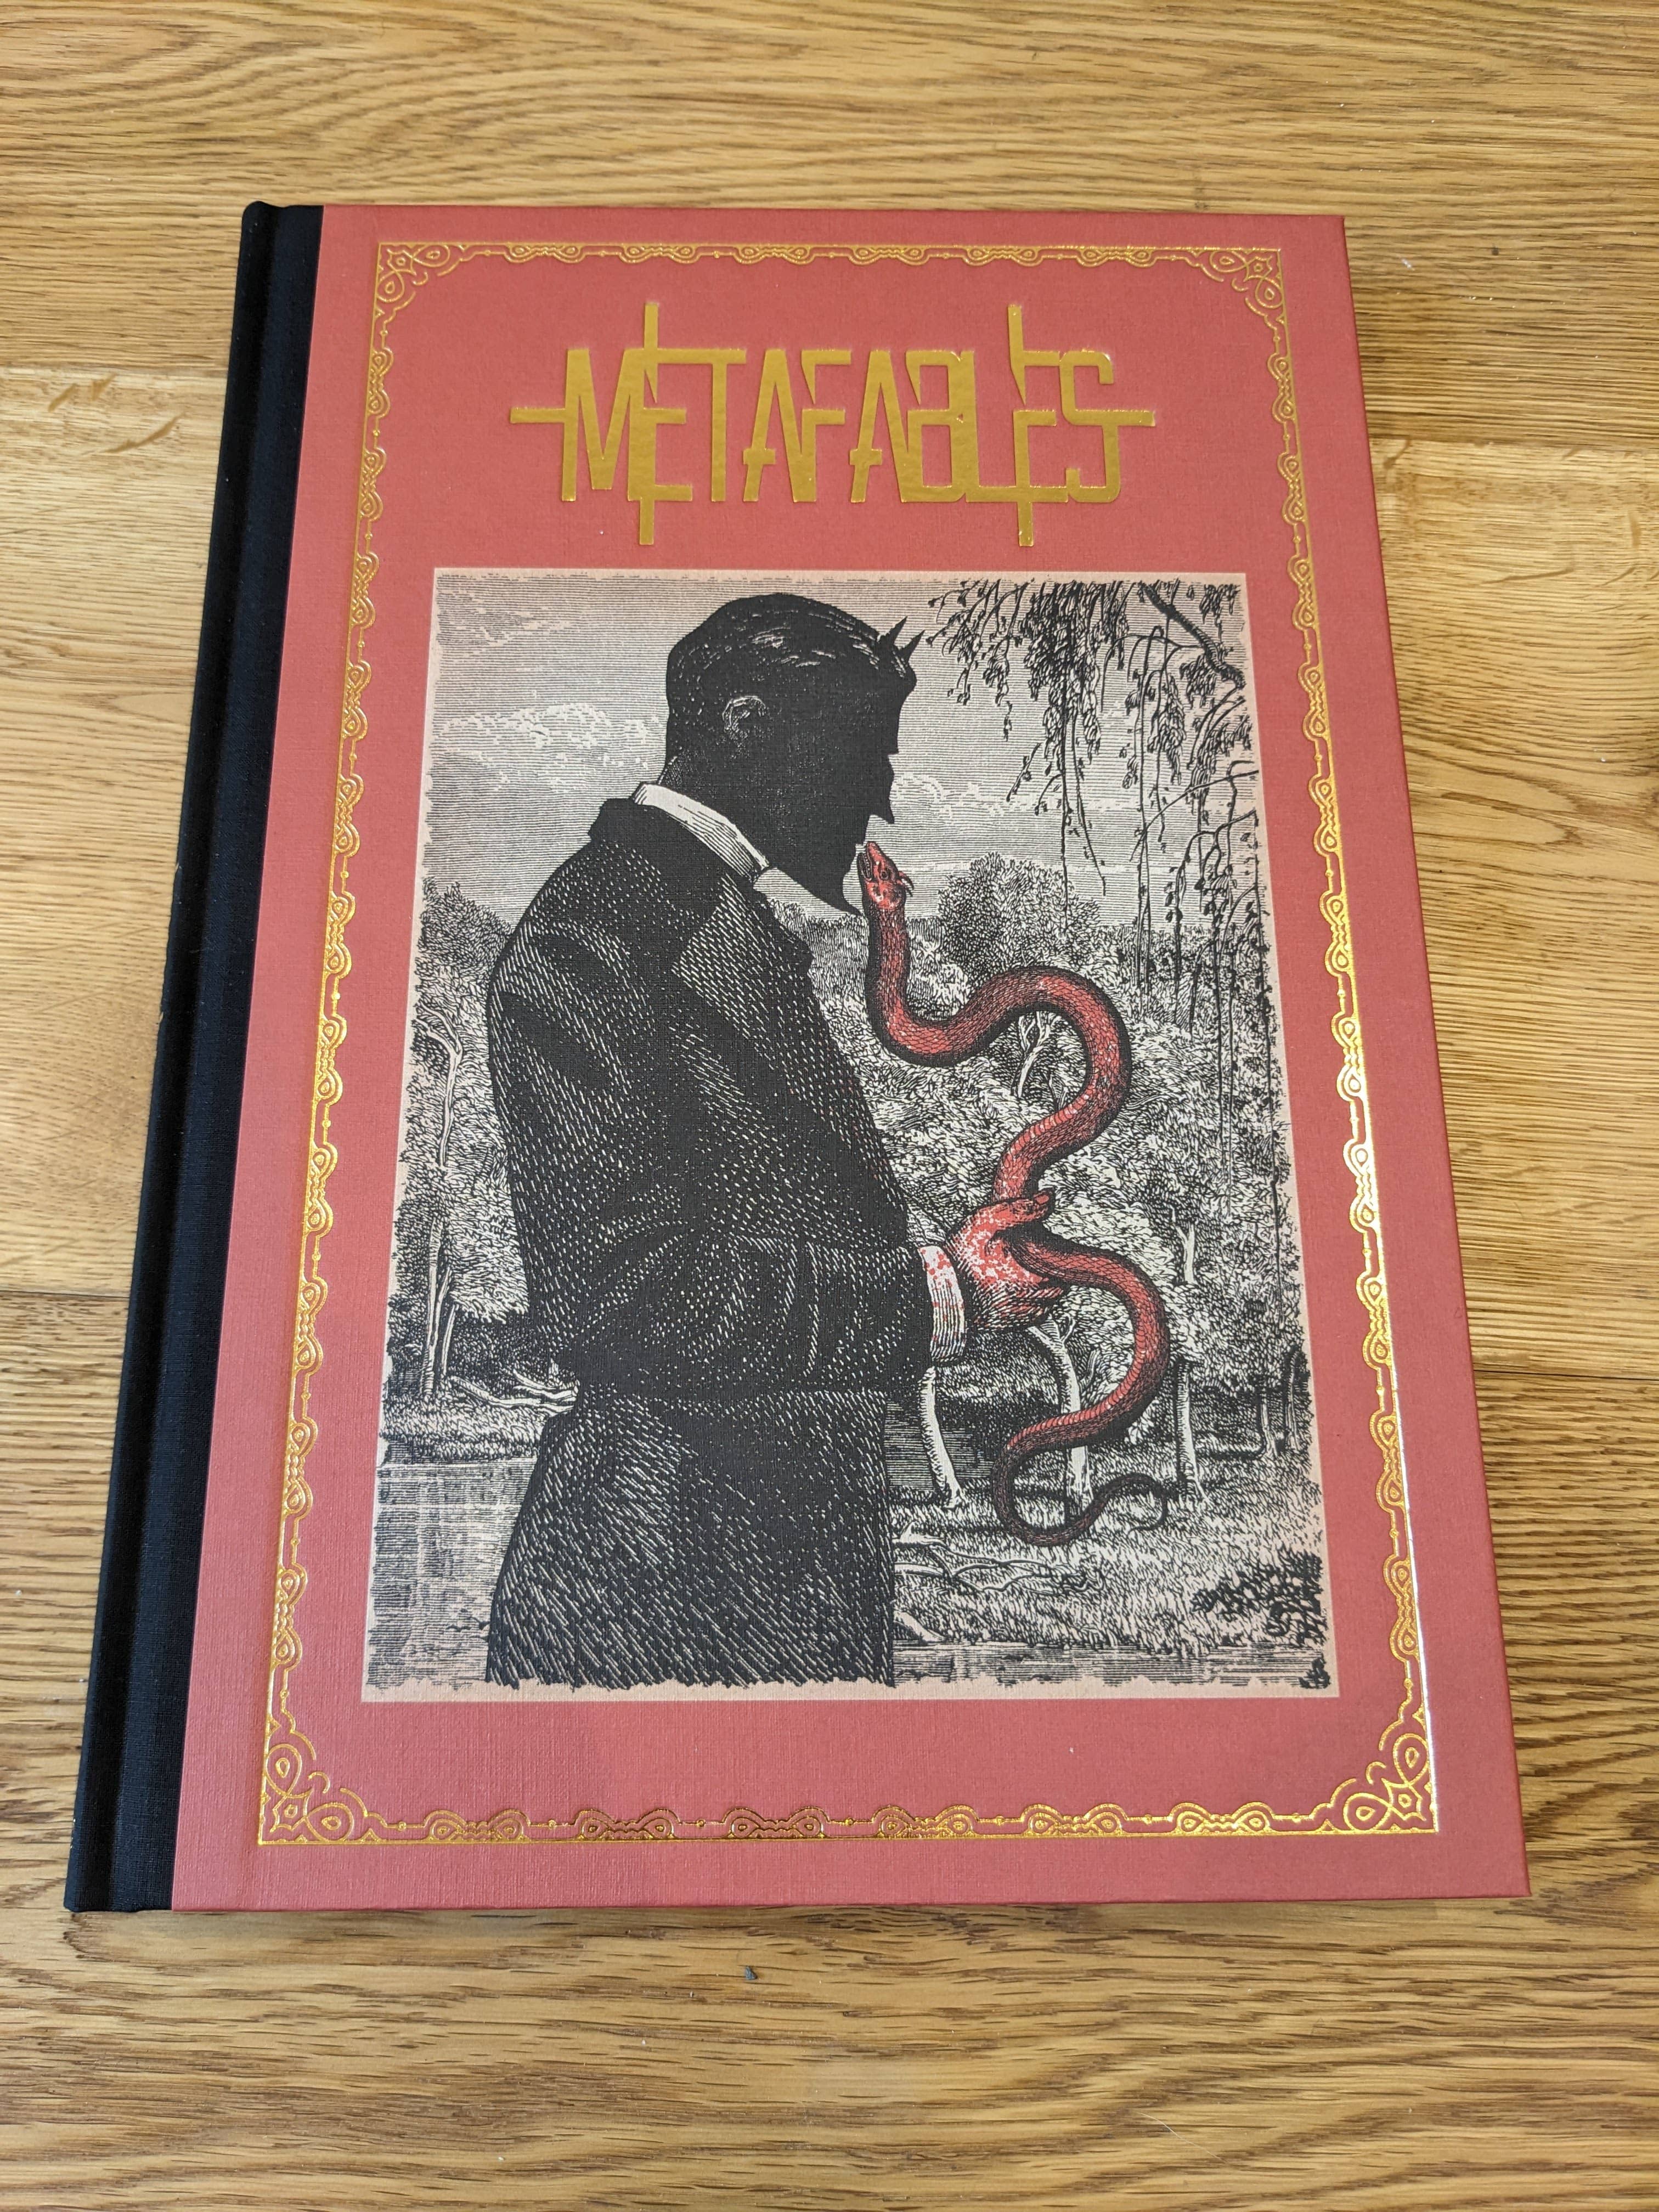 Metafables Art Book